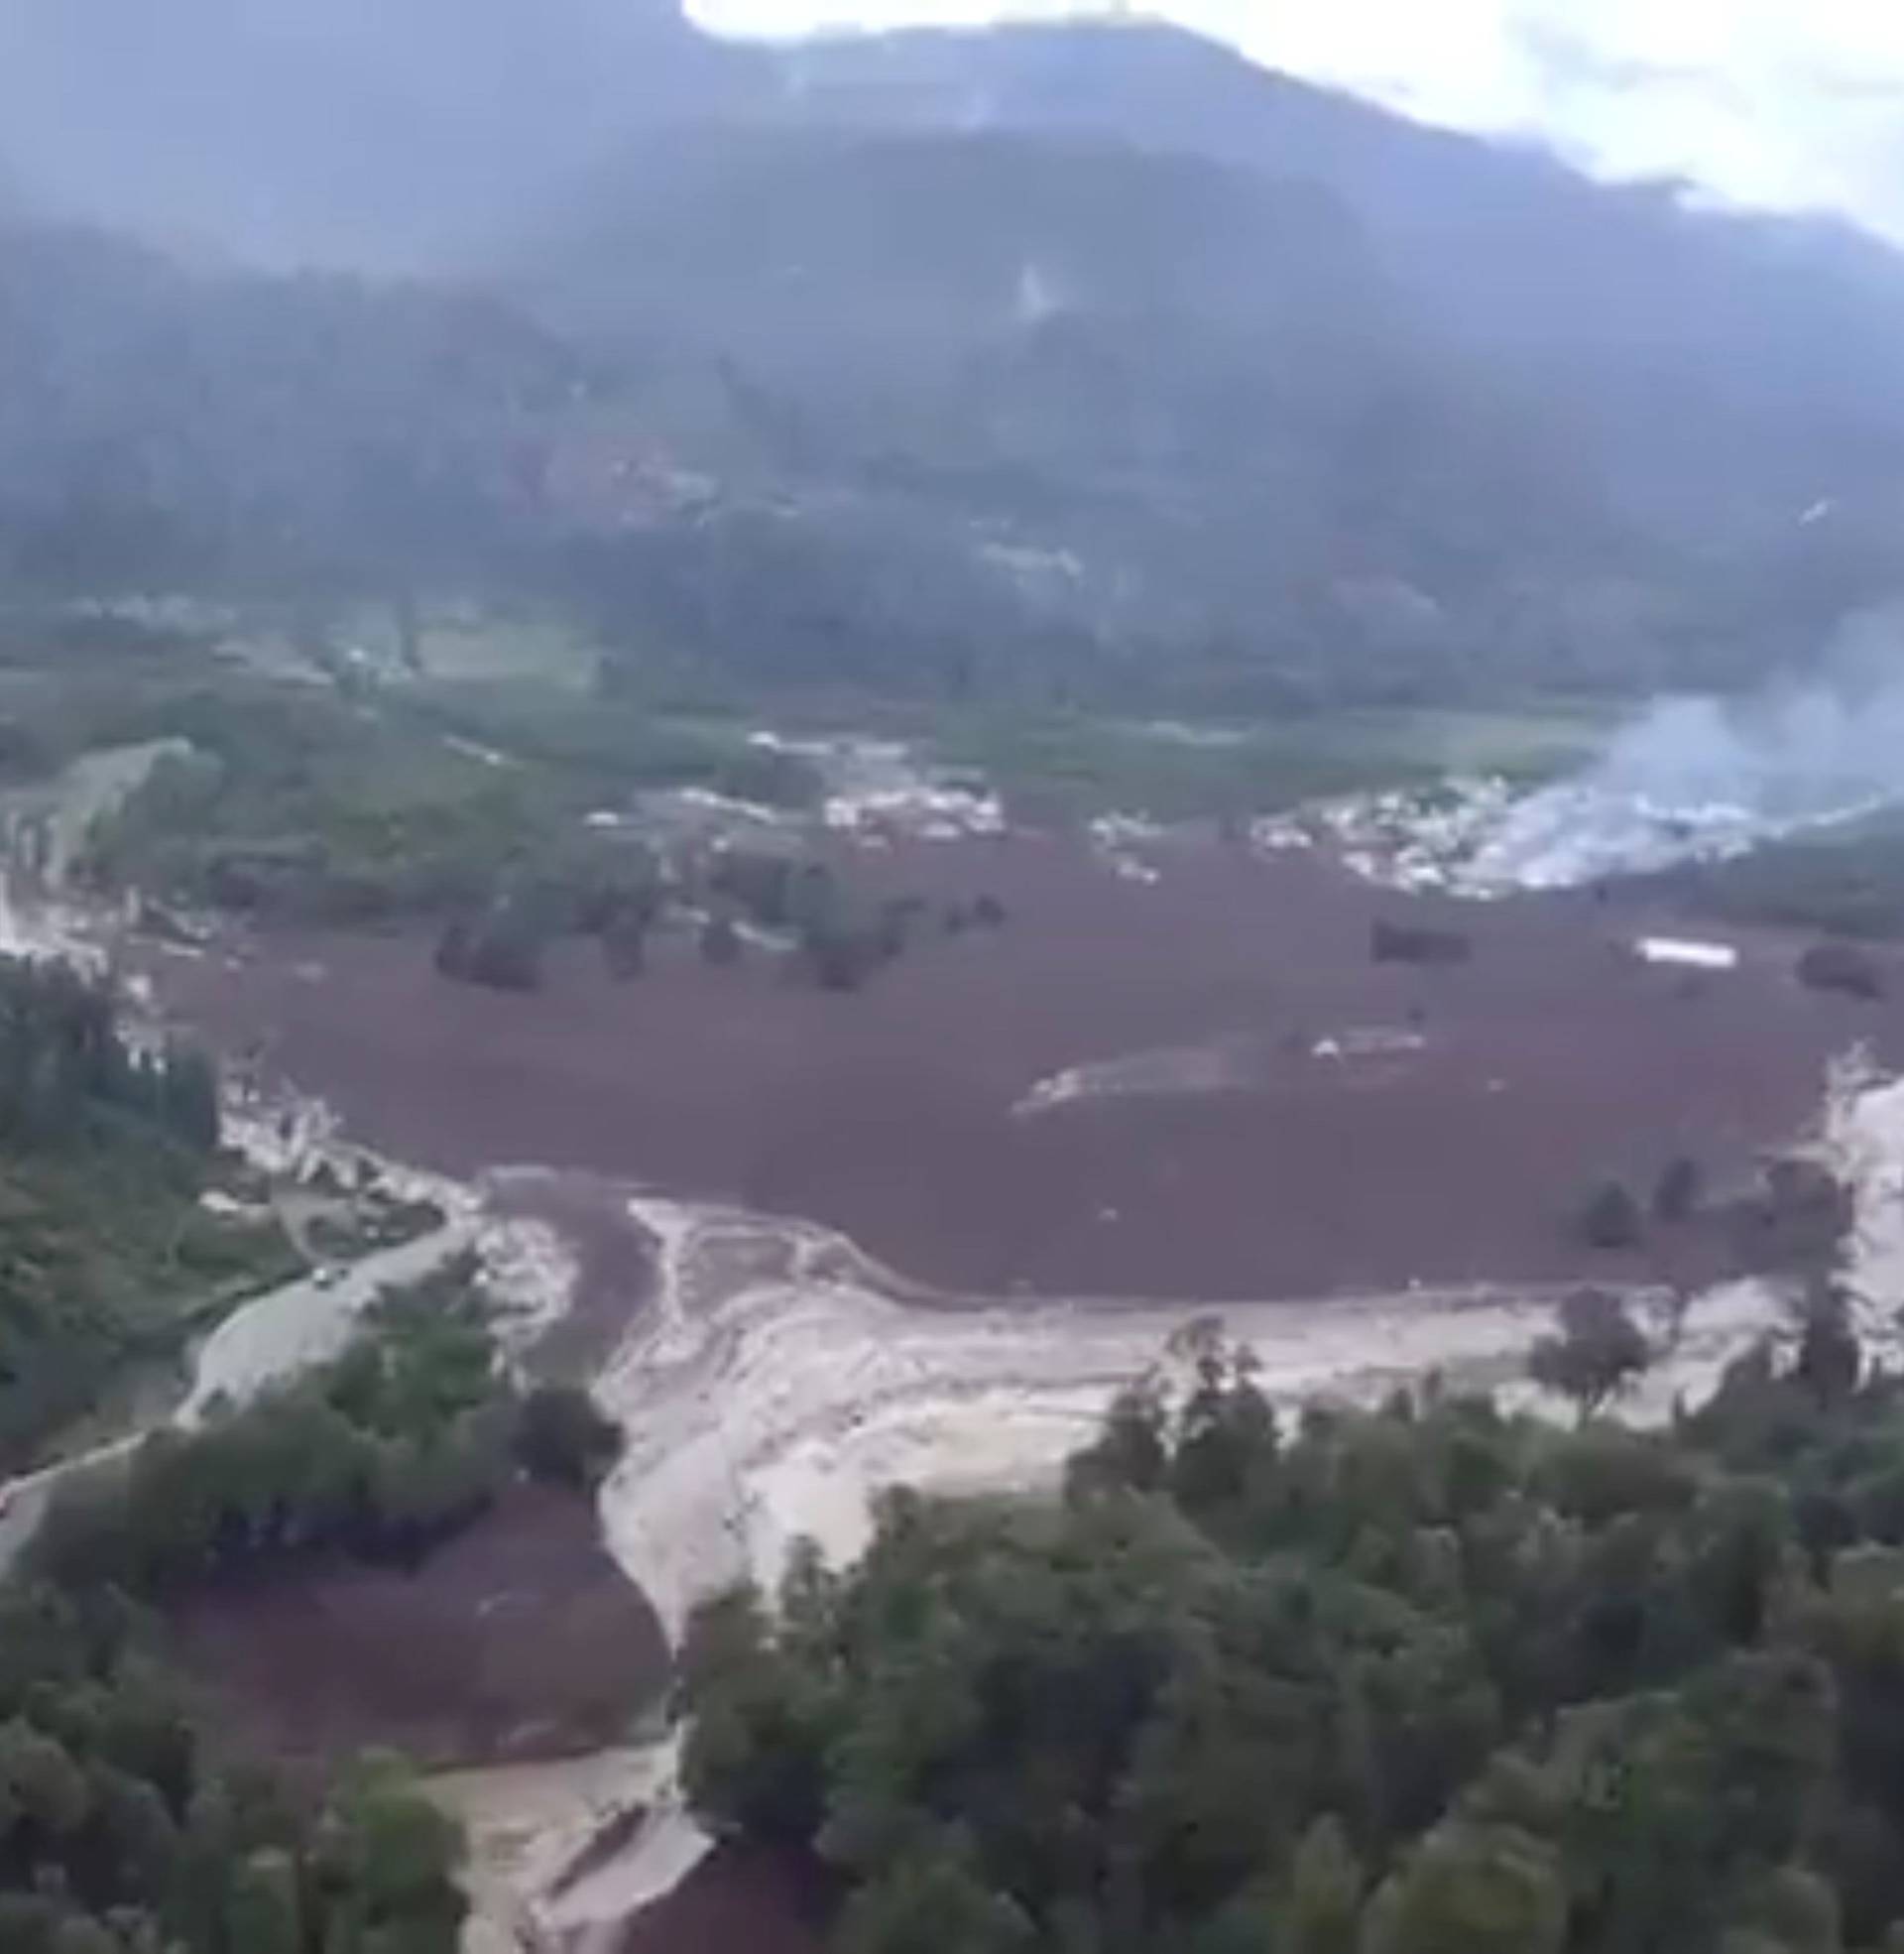 Damage done by a landslide is seen in Villa Santa Lucia